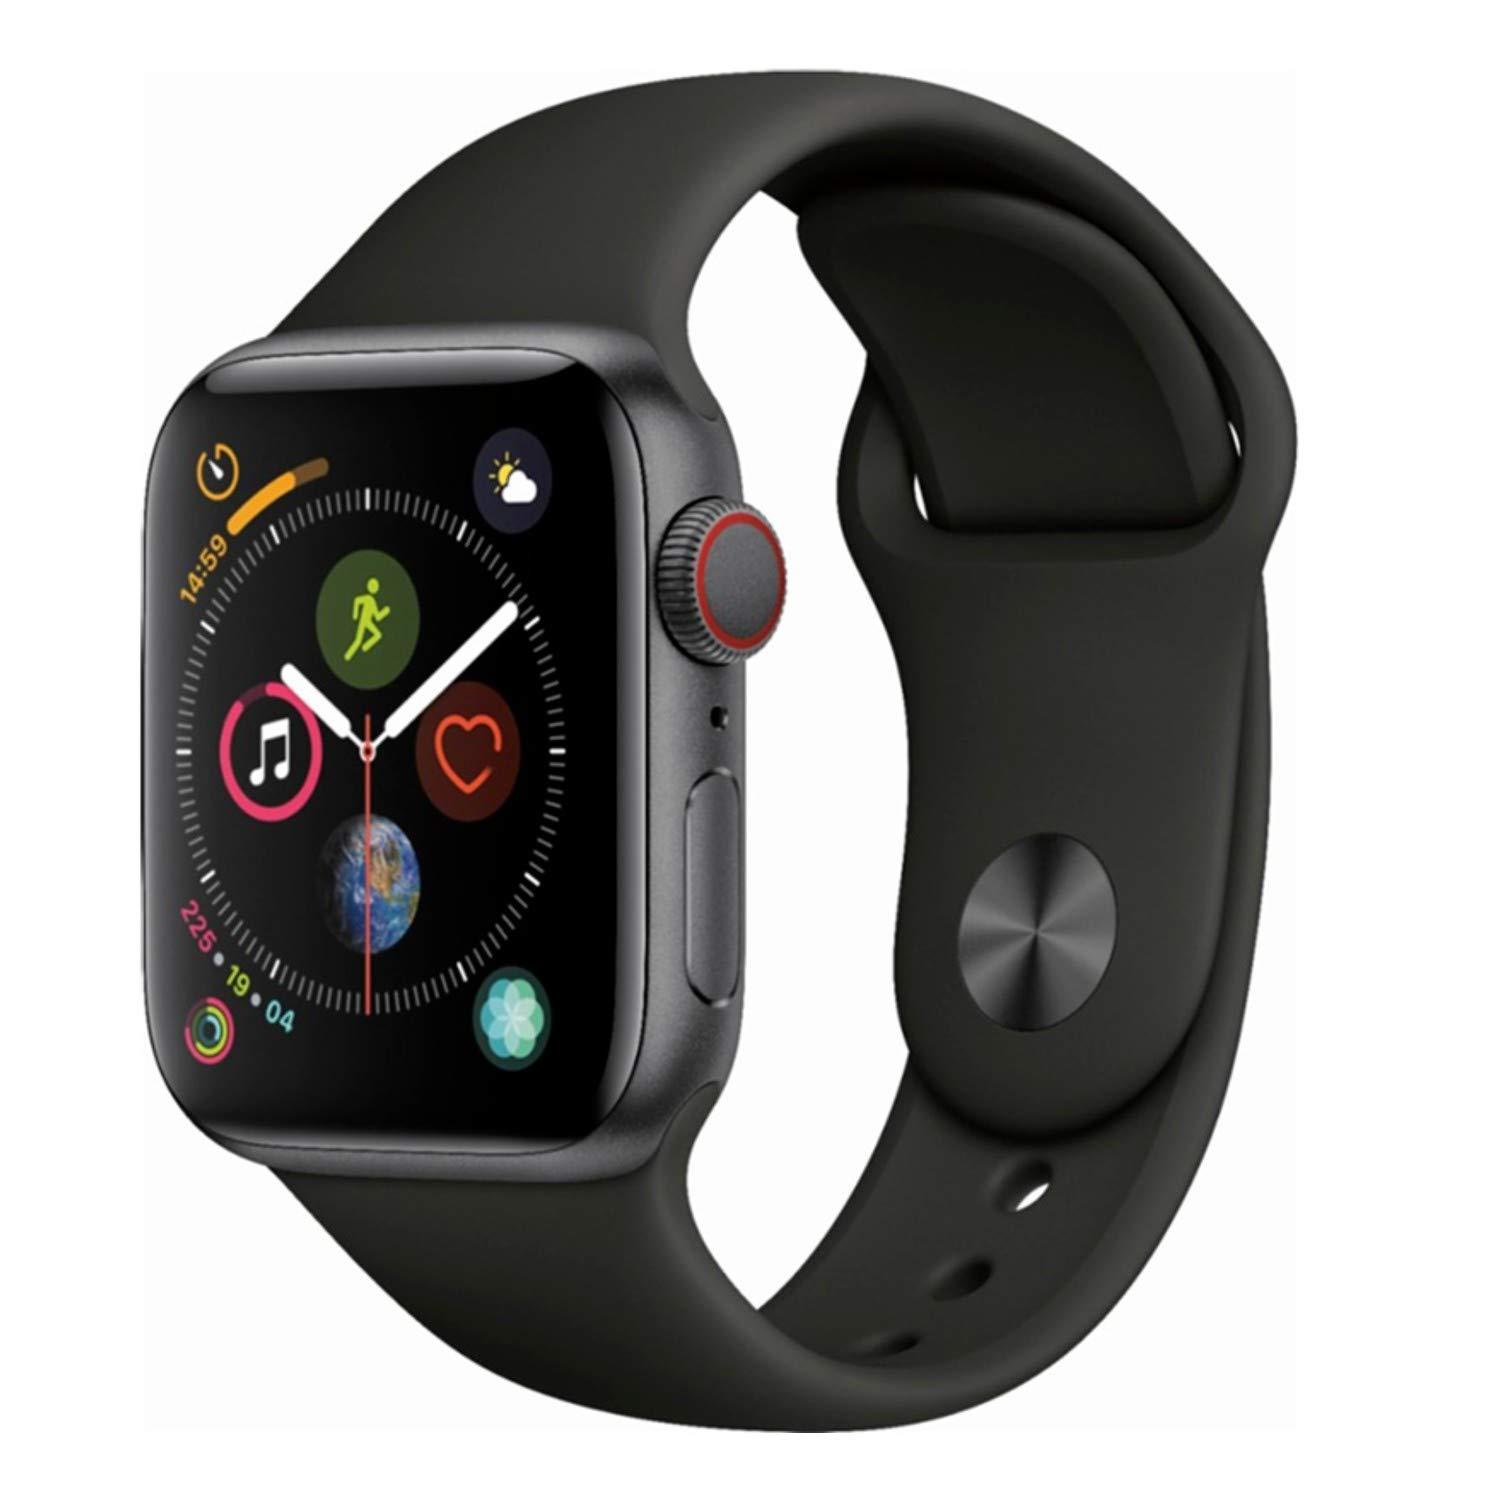 【予約早割】Apple Watch SE space Gray aluminum 44mm Apple Watch本体